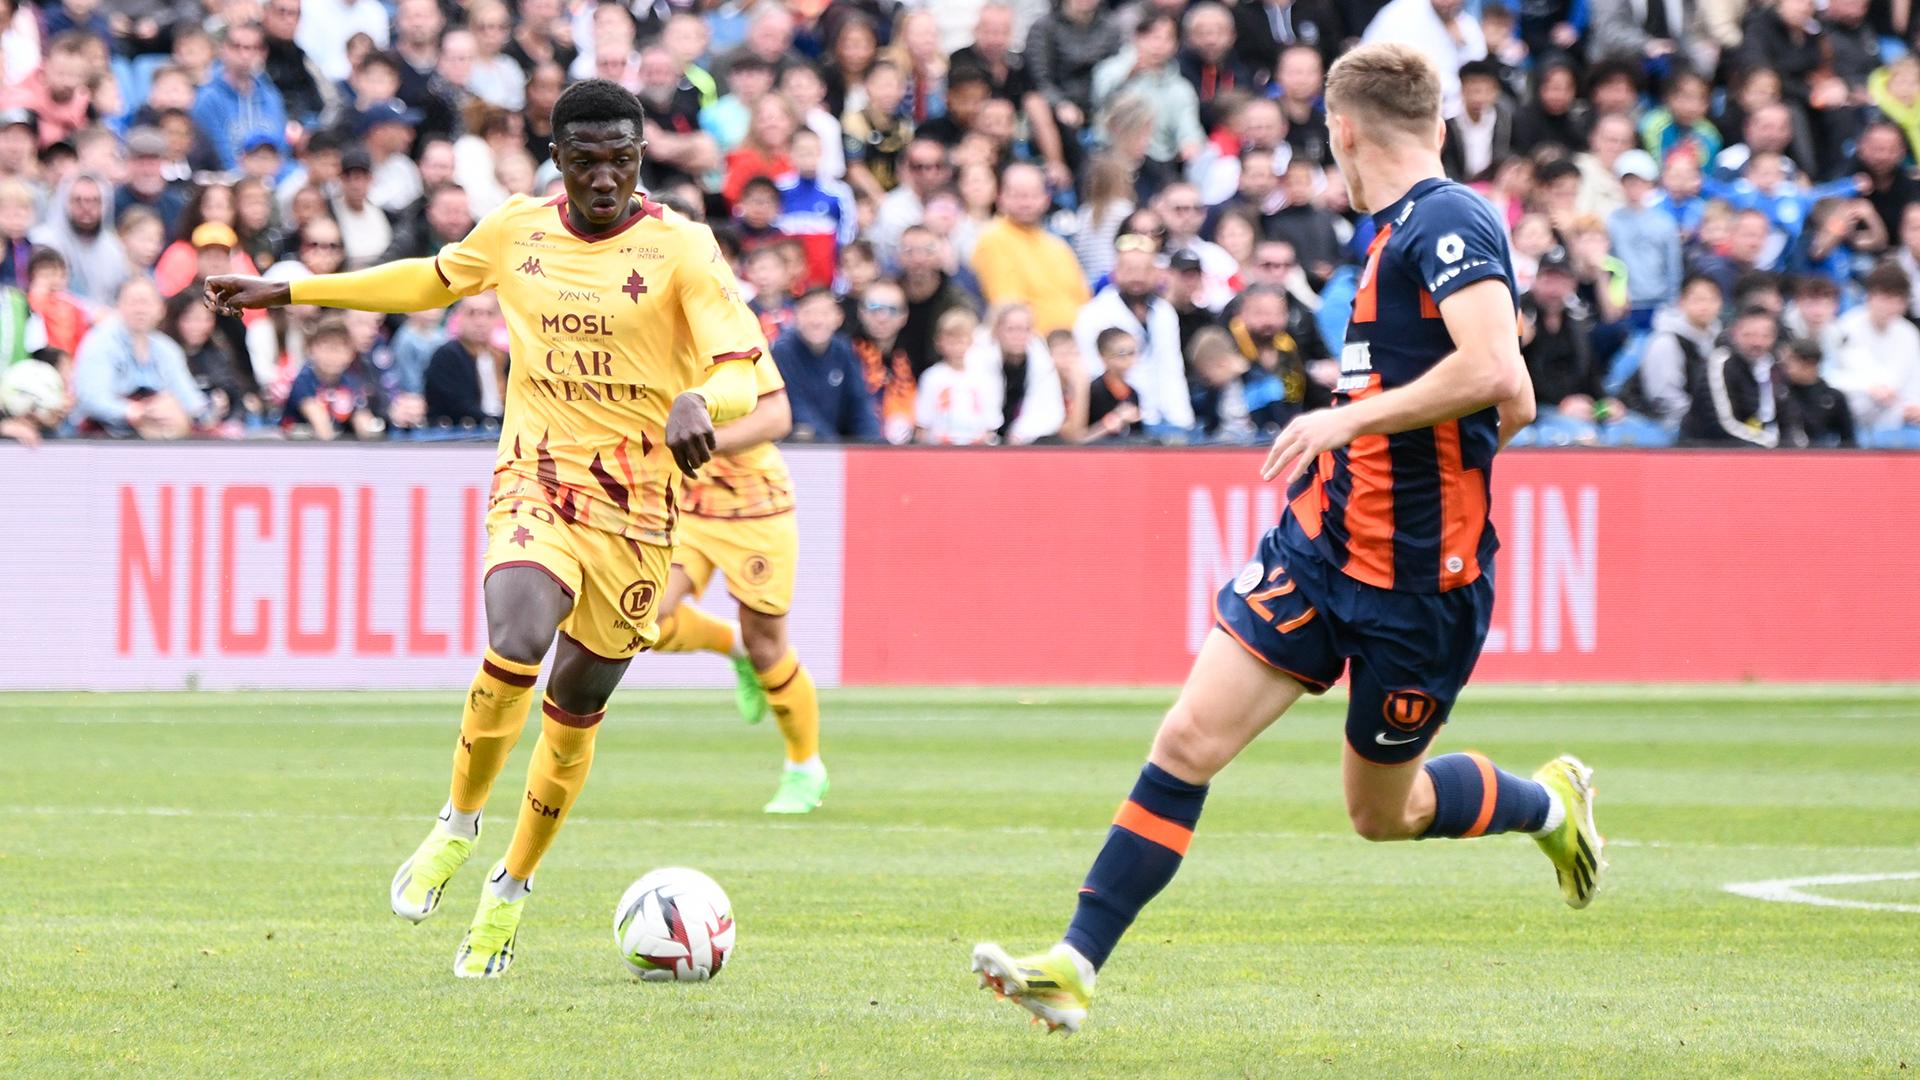 Video|Ligue 1 Highlights: Montpellier vs Metz